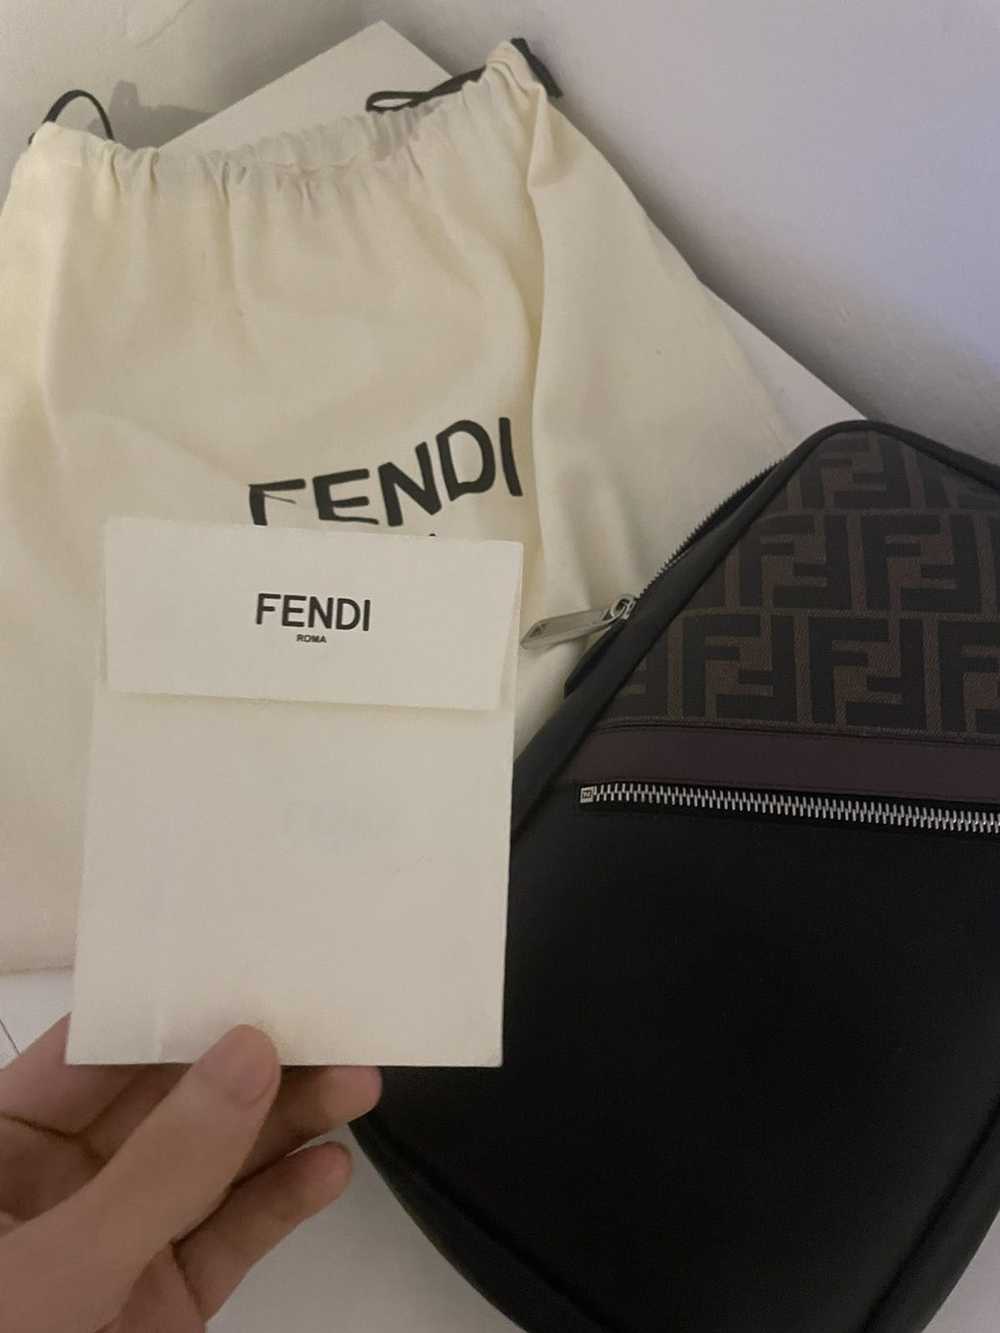 Fendi FENDI SLINGBAG - image 3